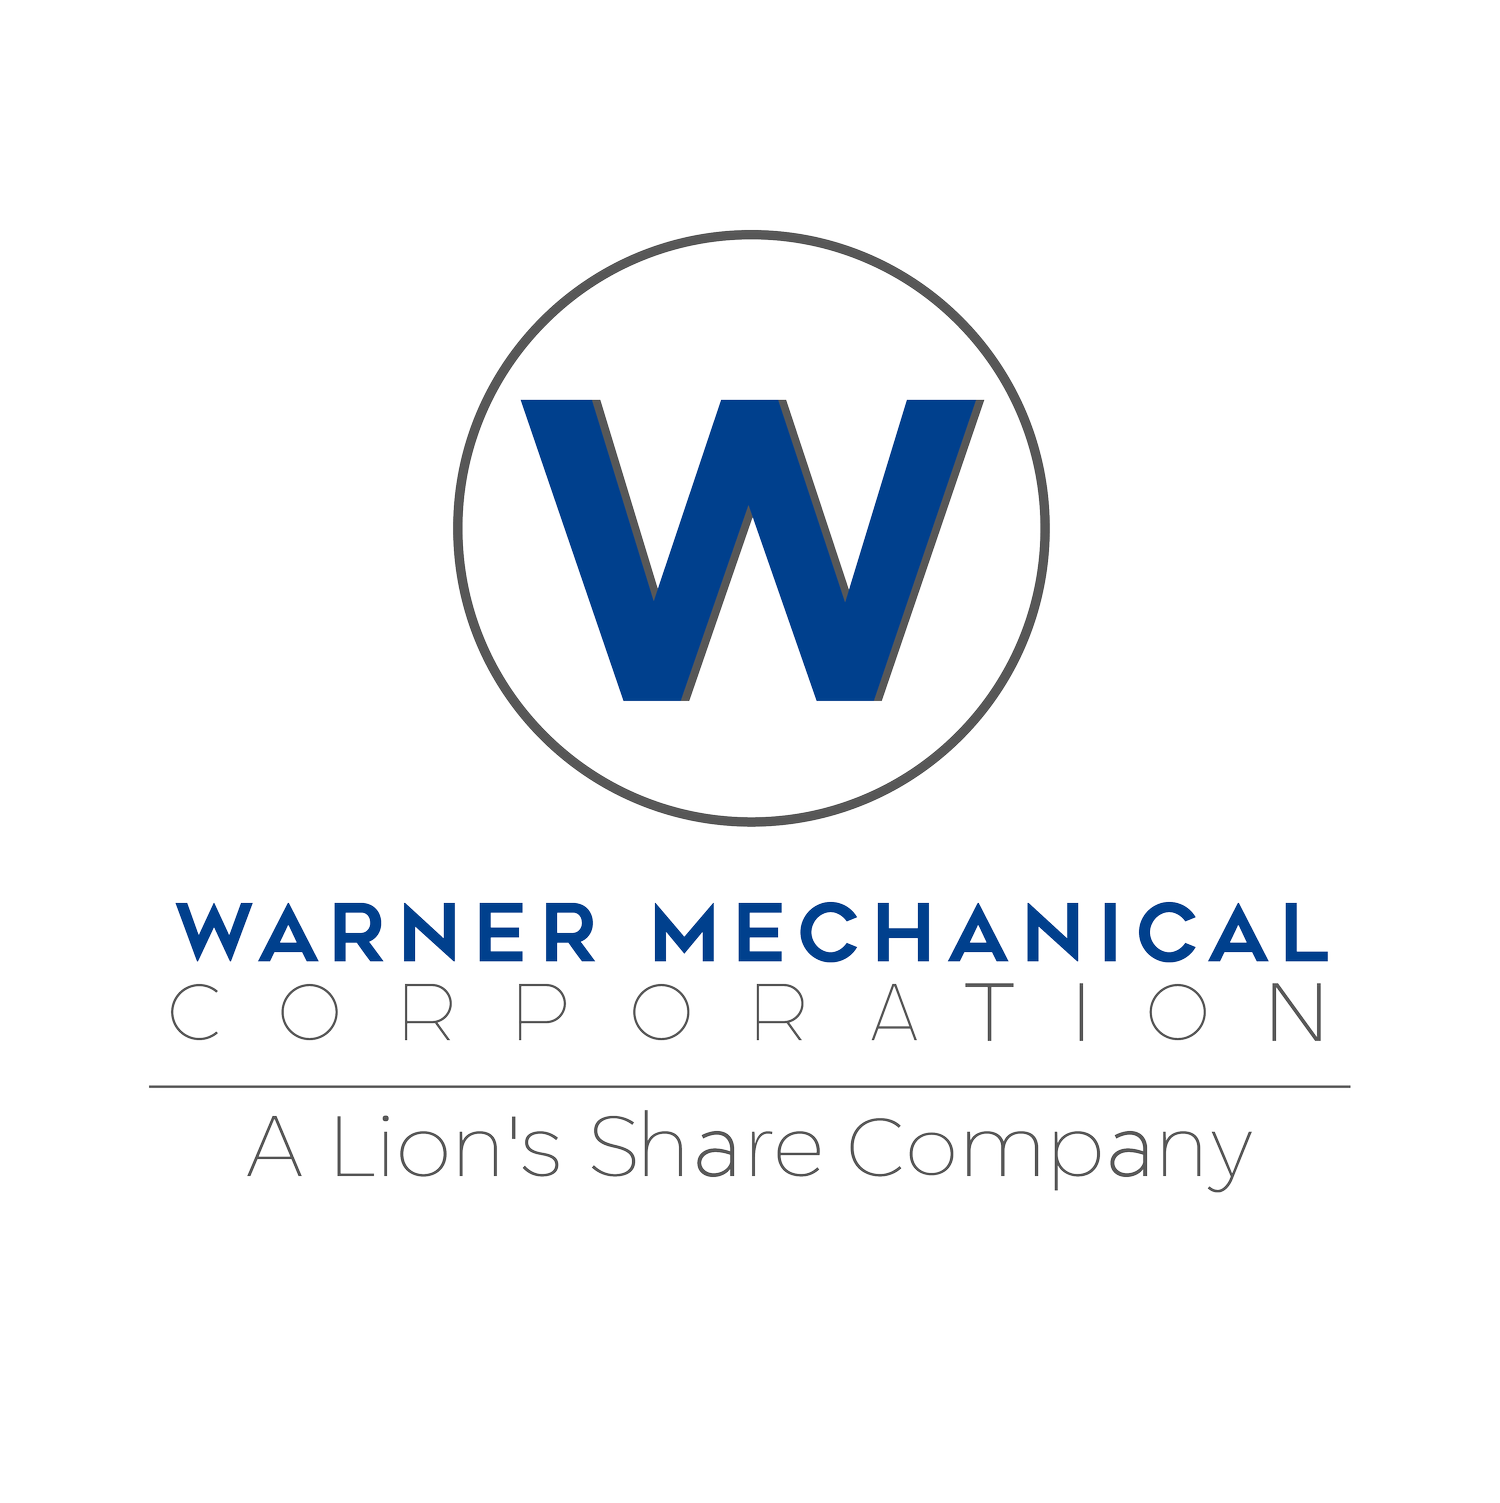 Warner Mechanical Corporation